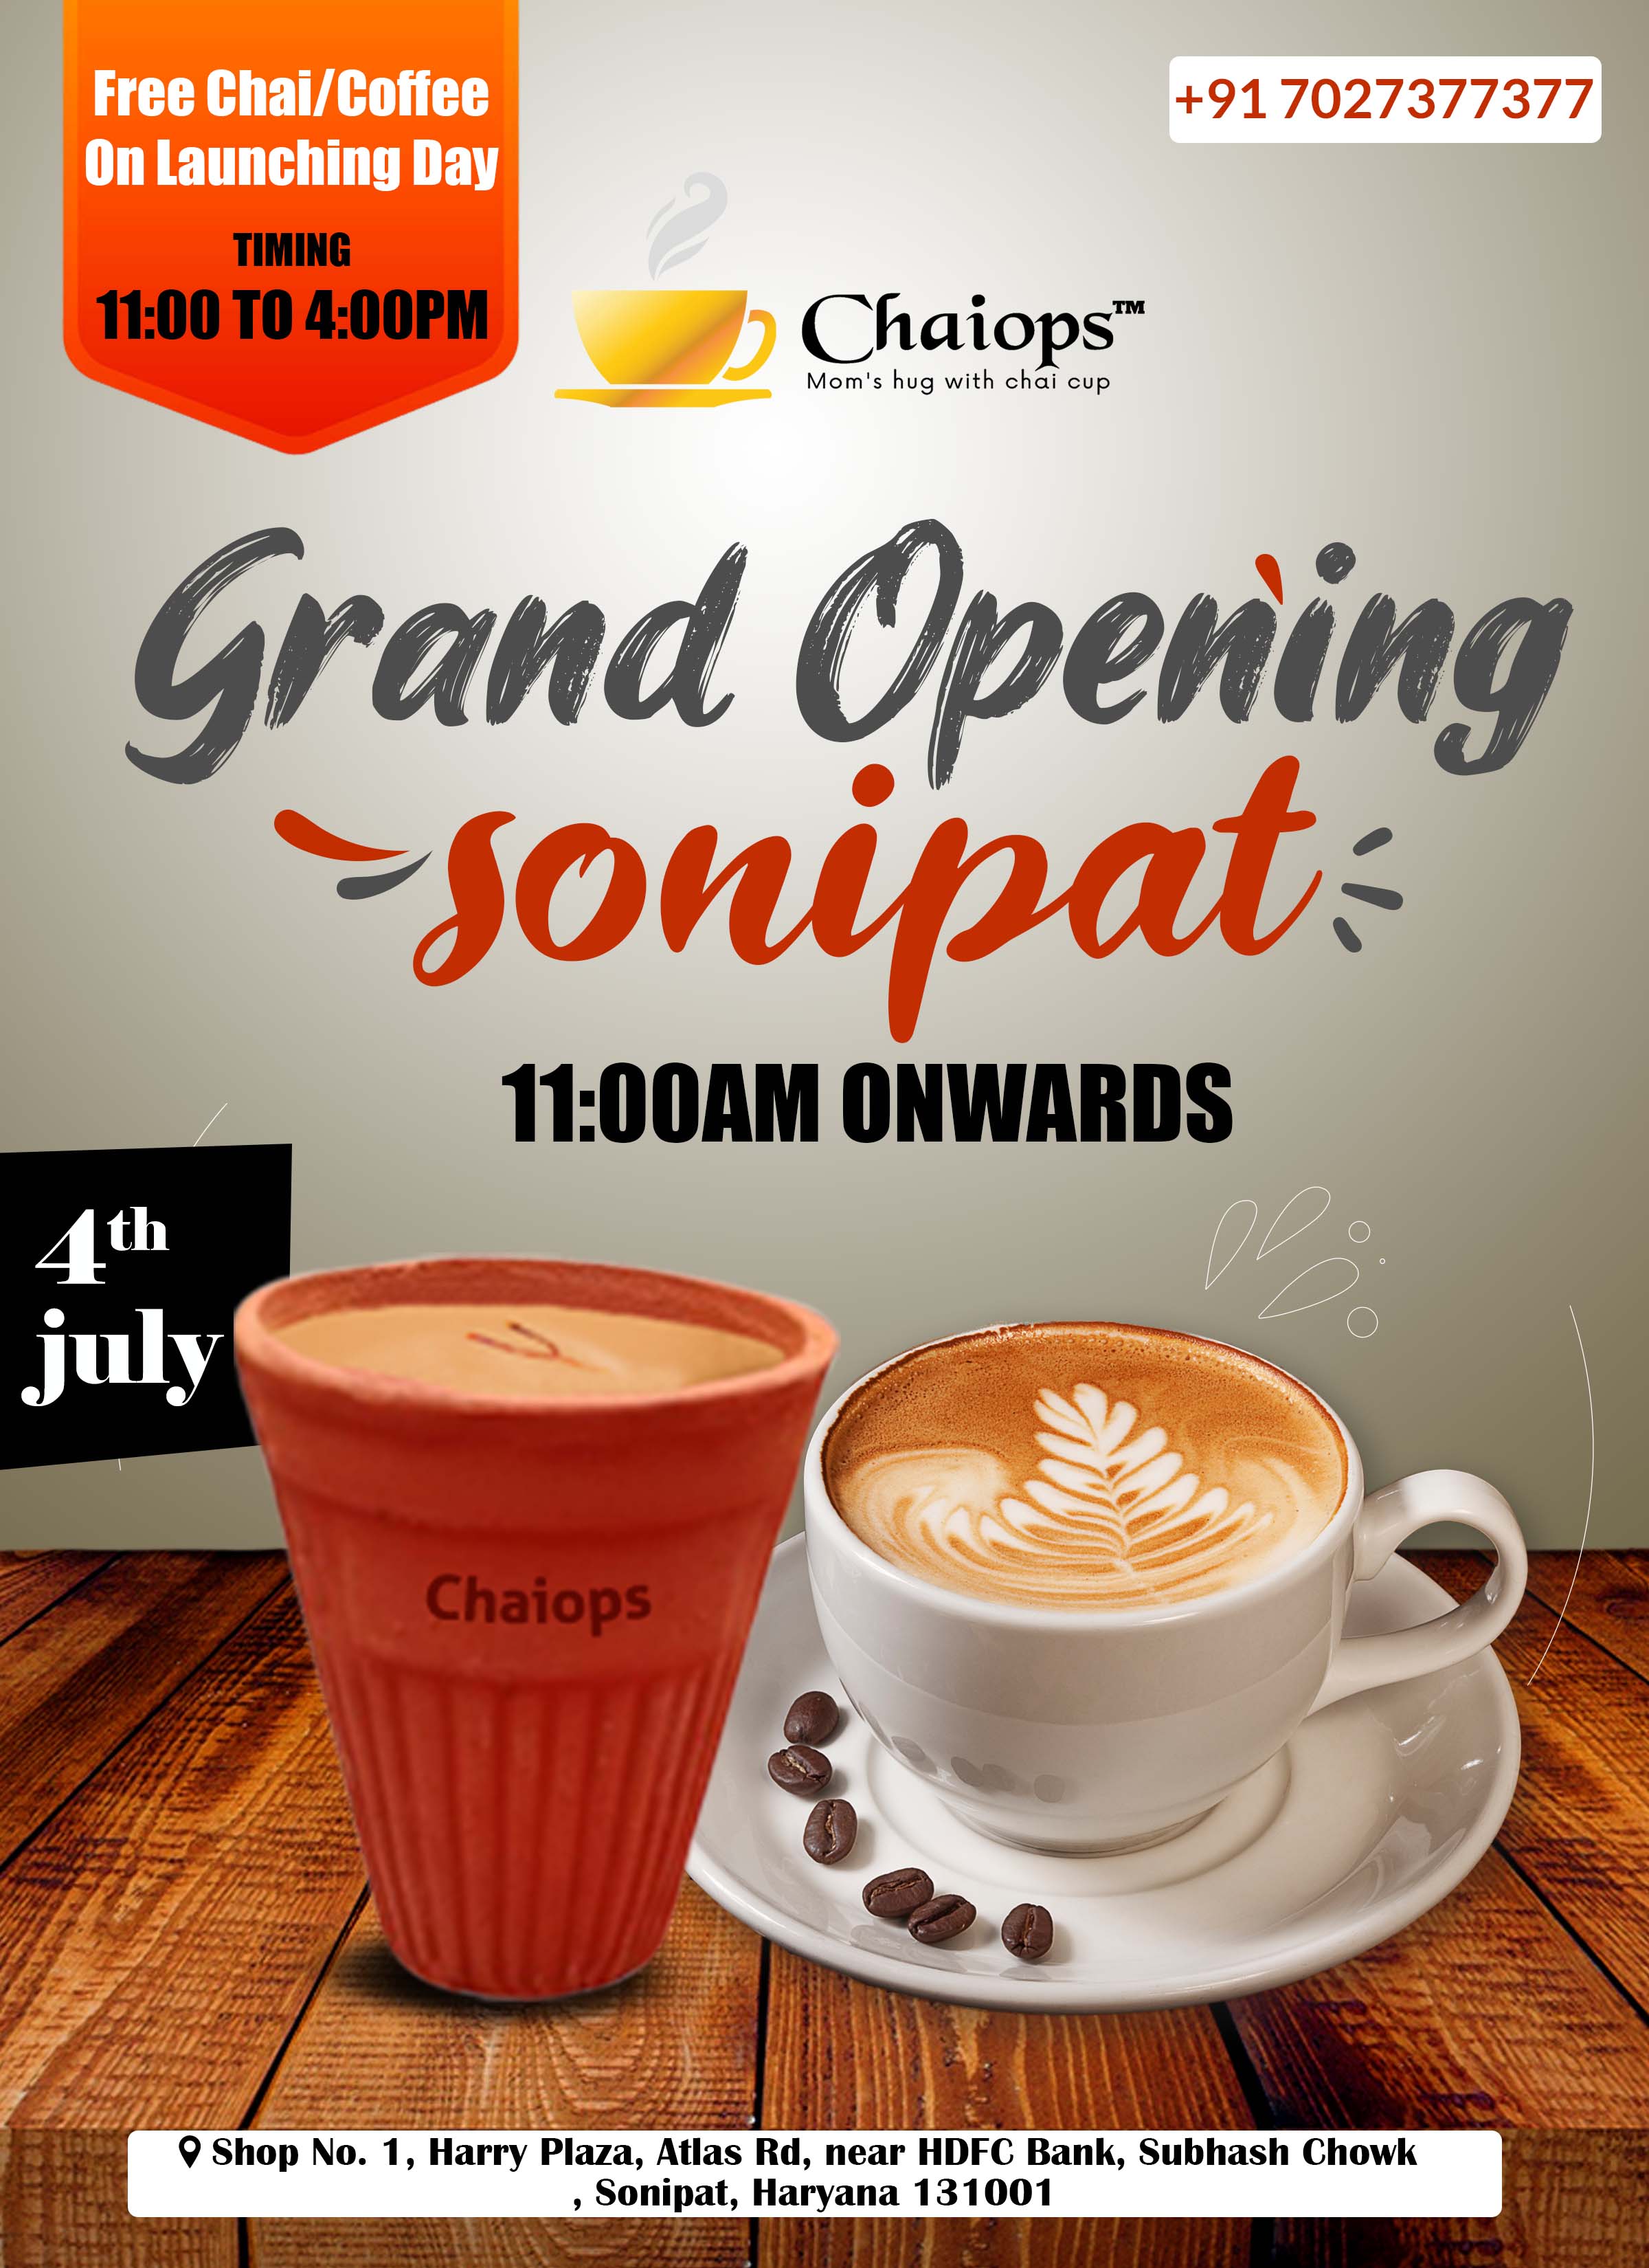 Chaiops Grand Opening Sonipat, Sonipat, Haryana, India